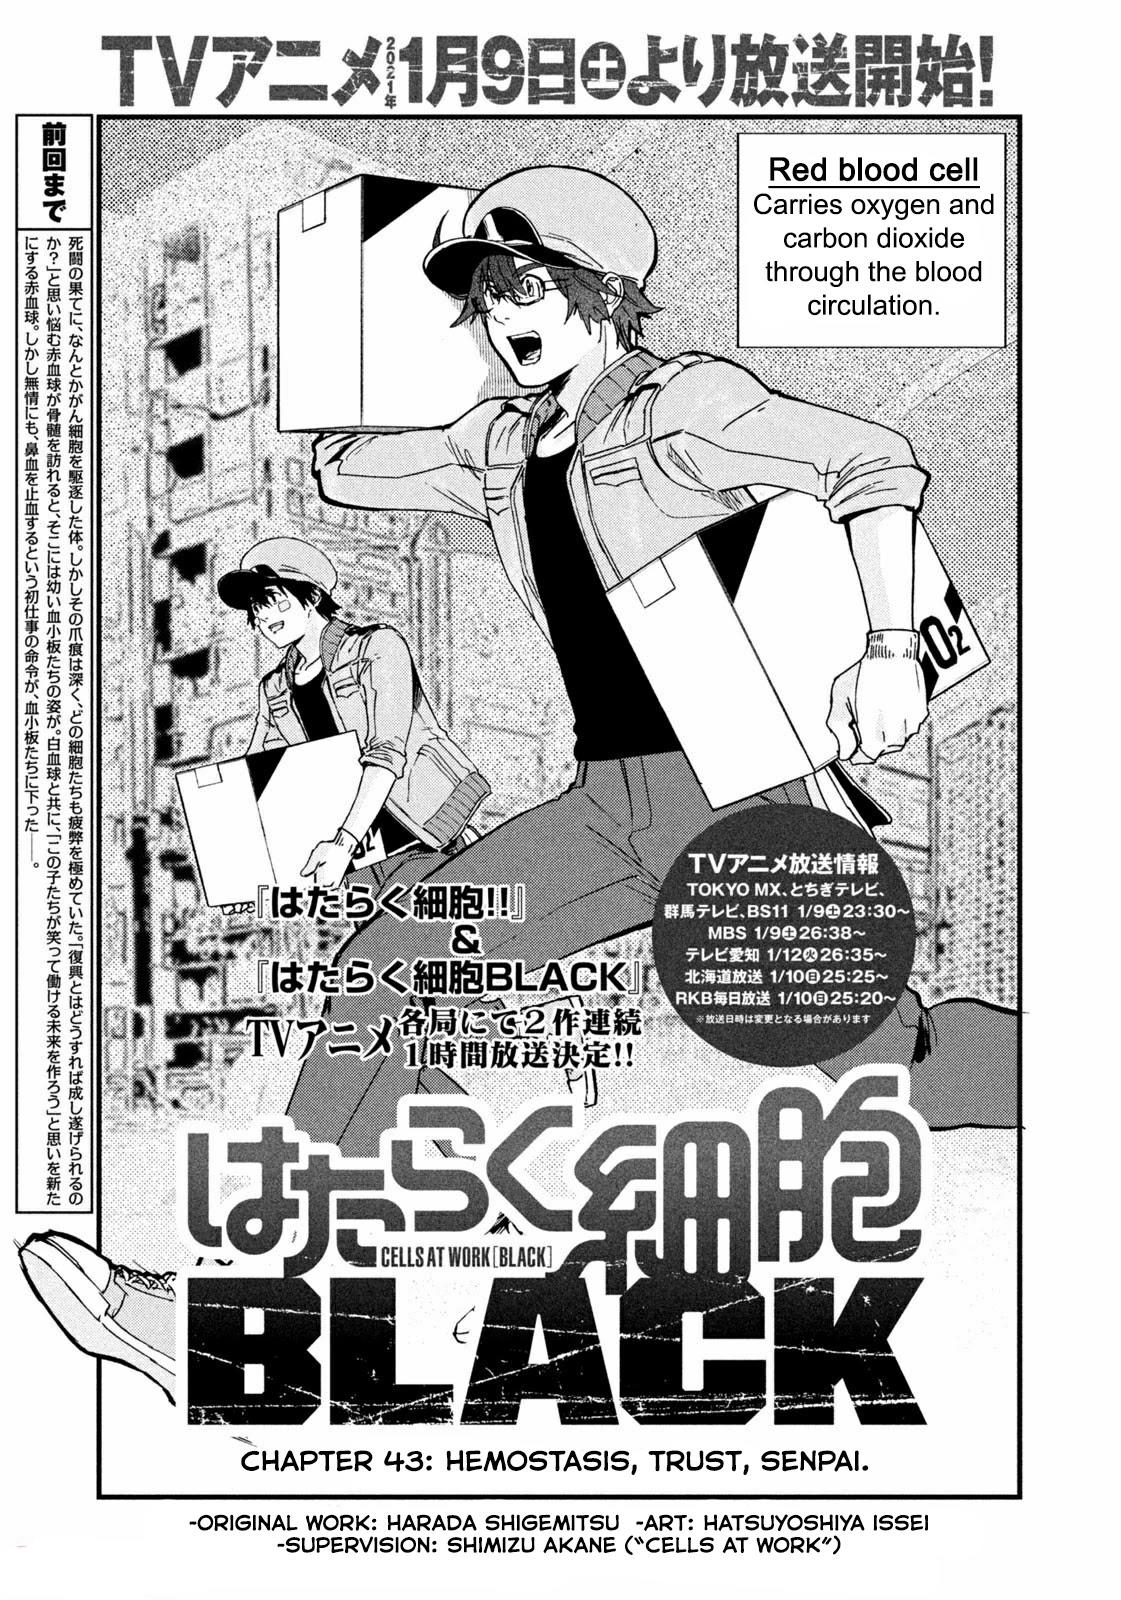 Read Hataraku Saibou Black Chapter 43 on Mangakakalot